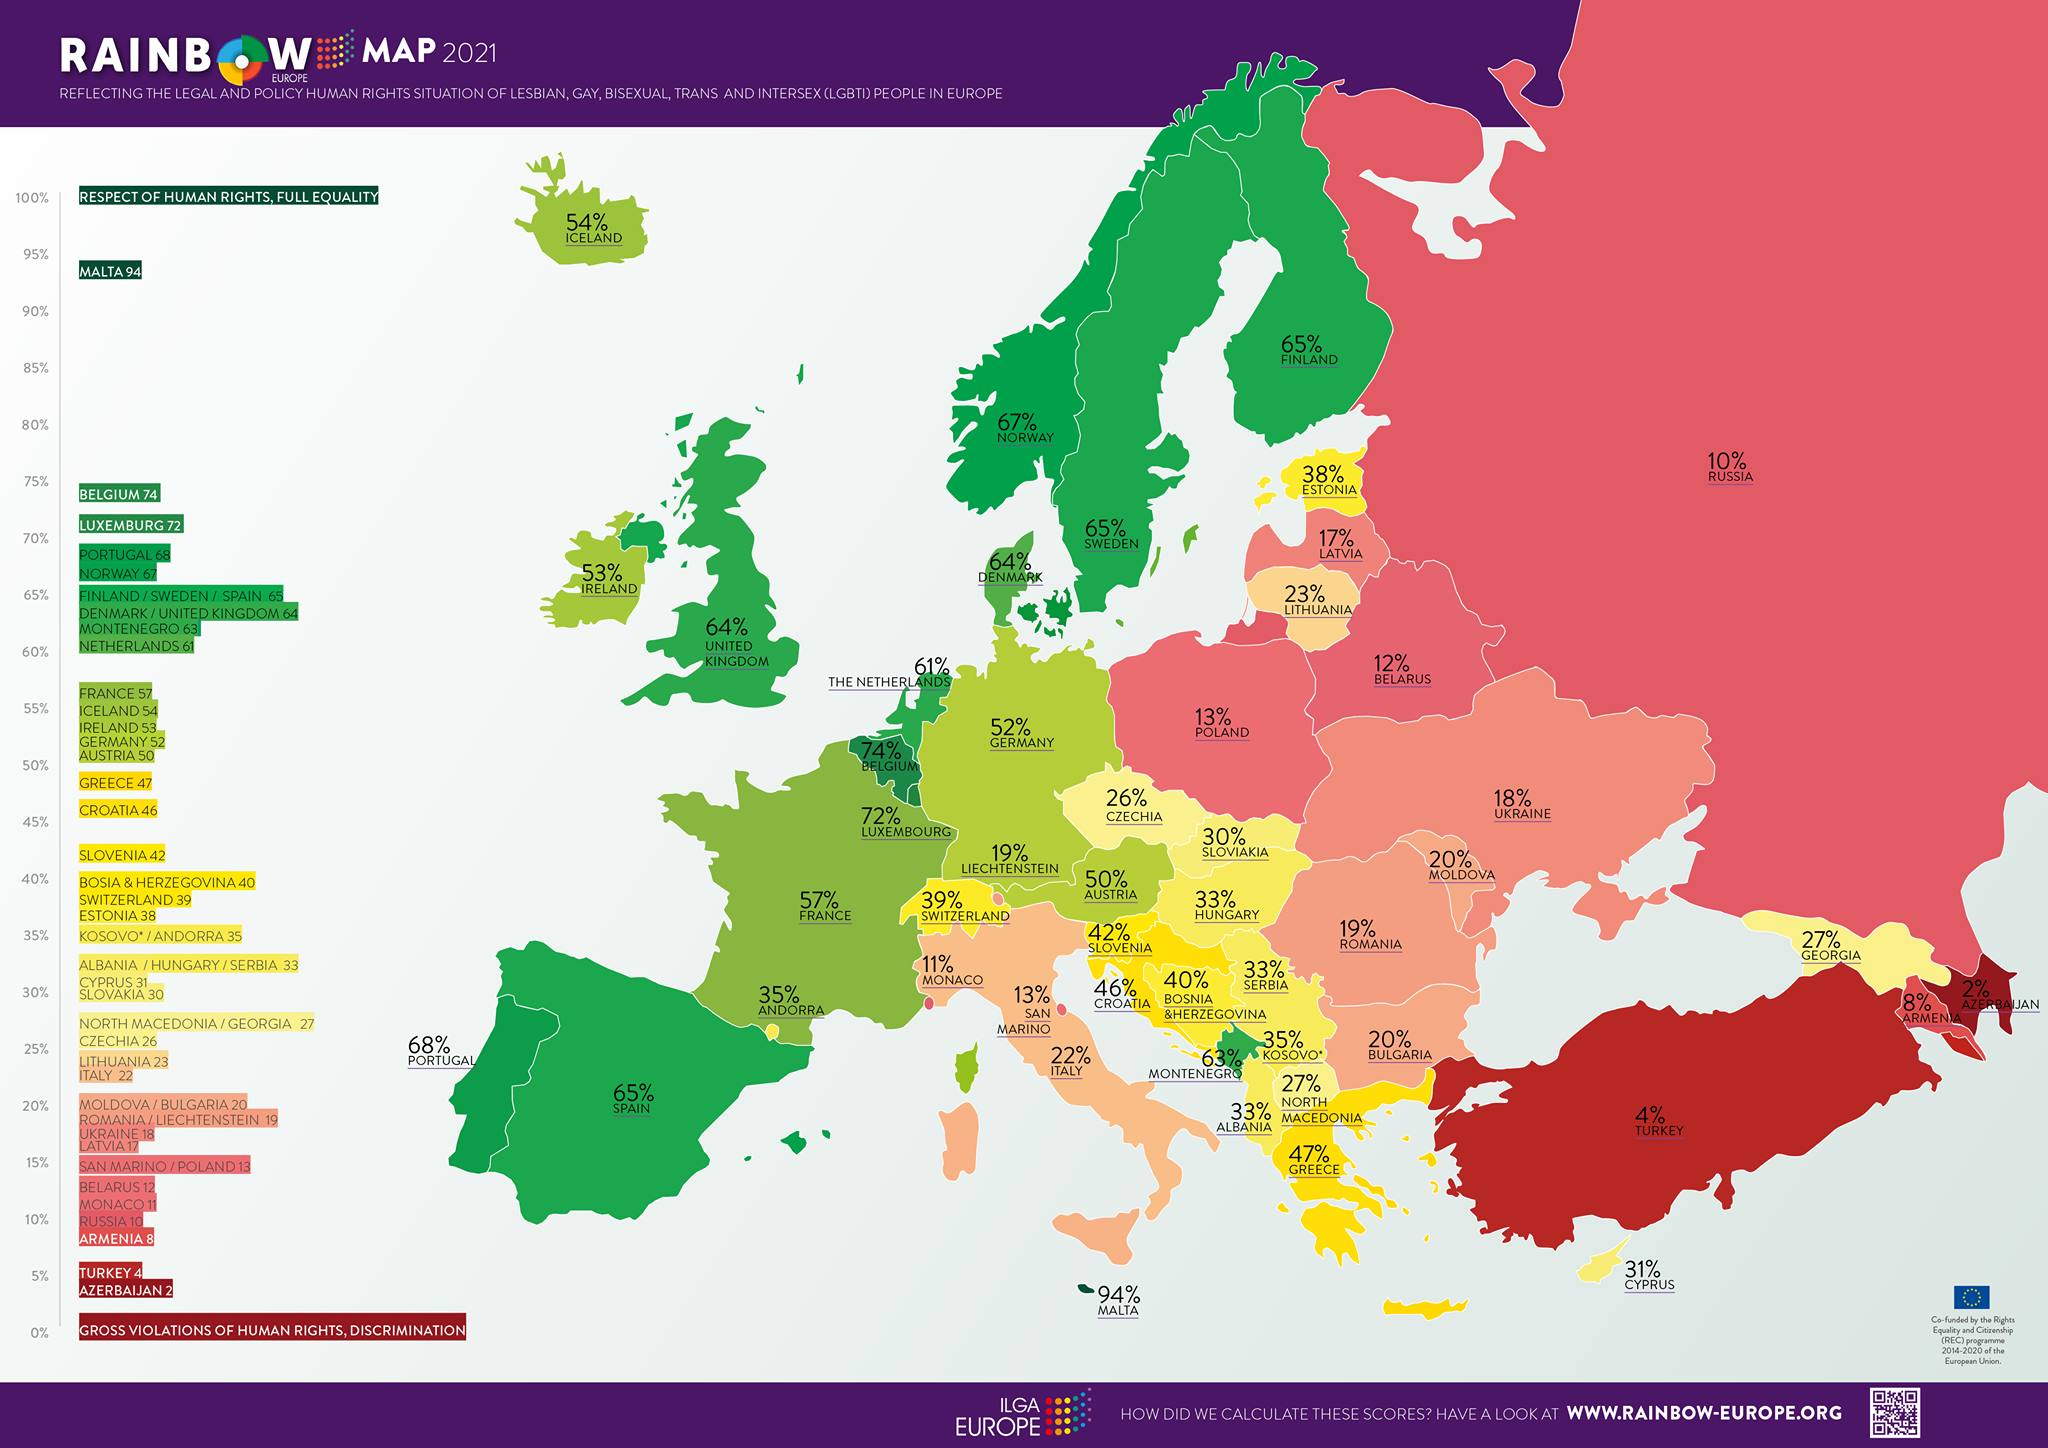 ILGA Europe’s Rainbow Map 2021 released